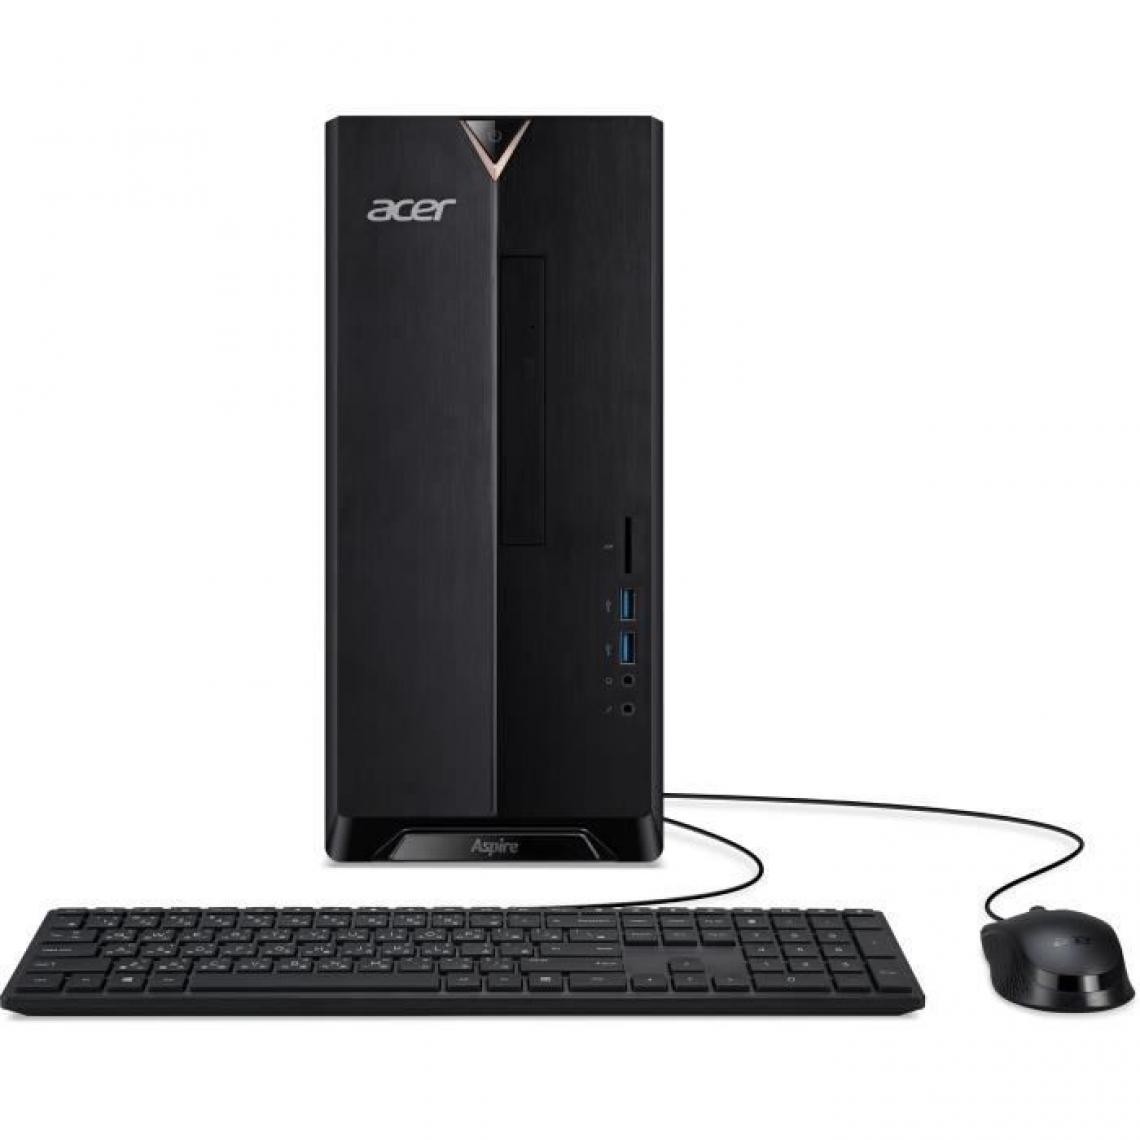 Acer - Unite centrale - ACER Aspire TC-391 - Ryzen 3-4300G - RAM 8Go - Stockage 256Go SSD - Windows 10 - PC Fixe